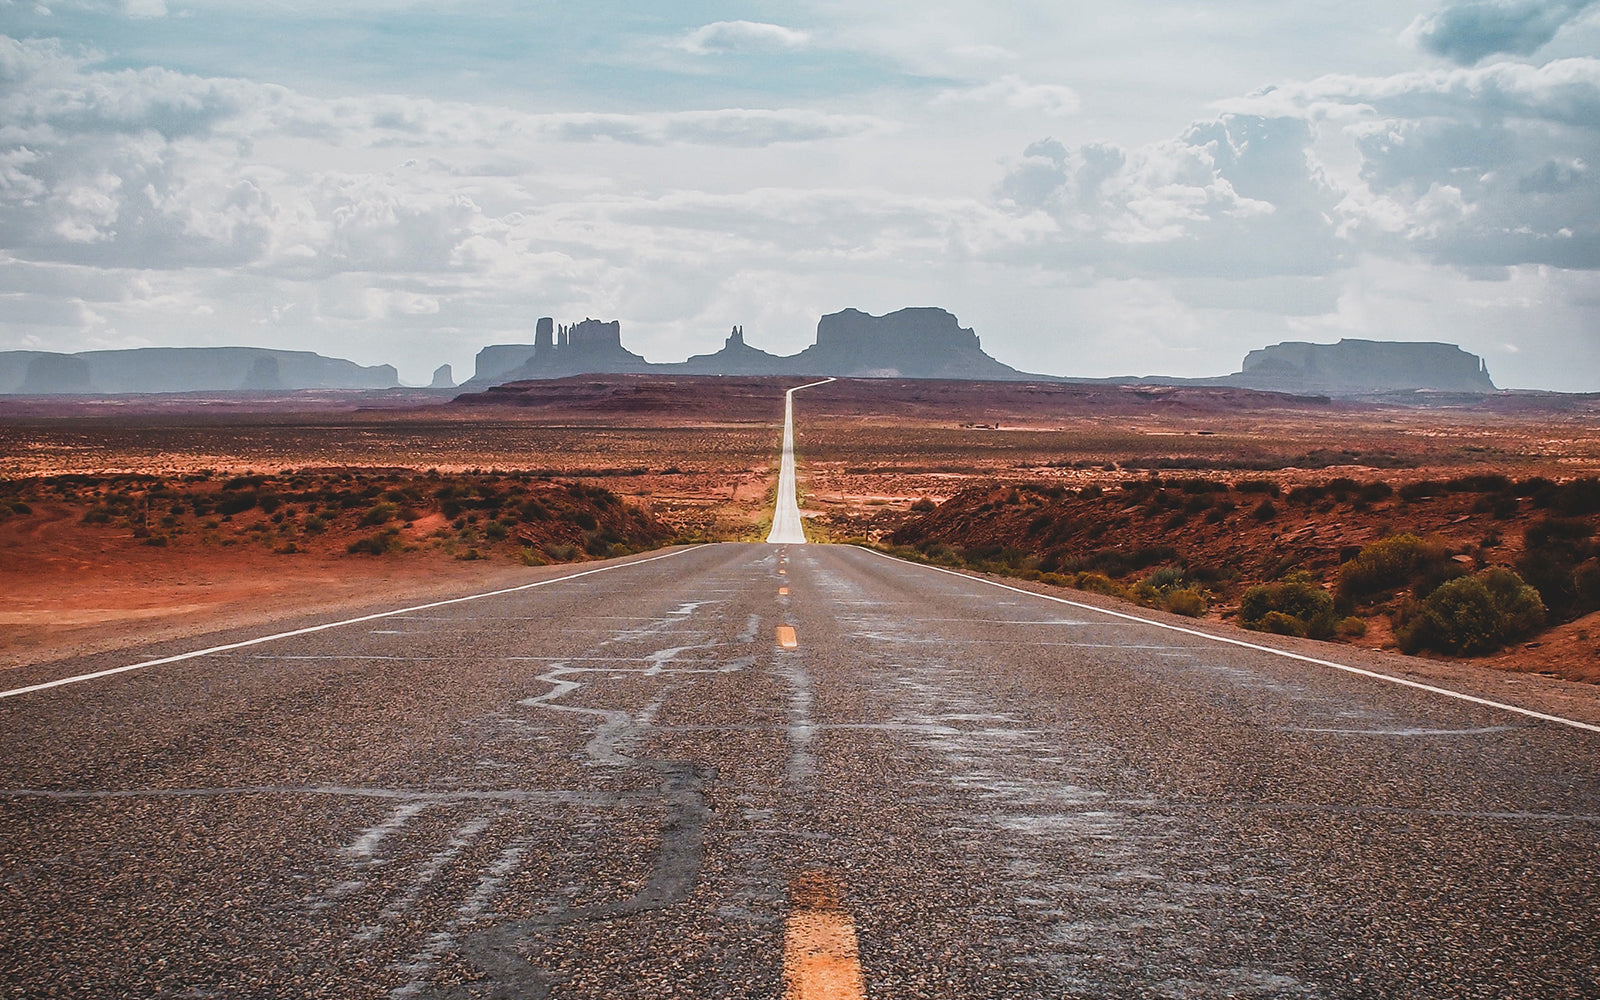 Road Trip: The Great Southwest Desert Art Tour